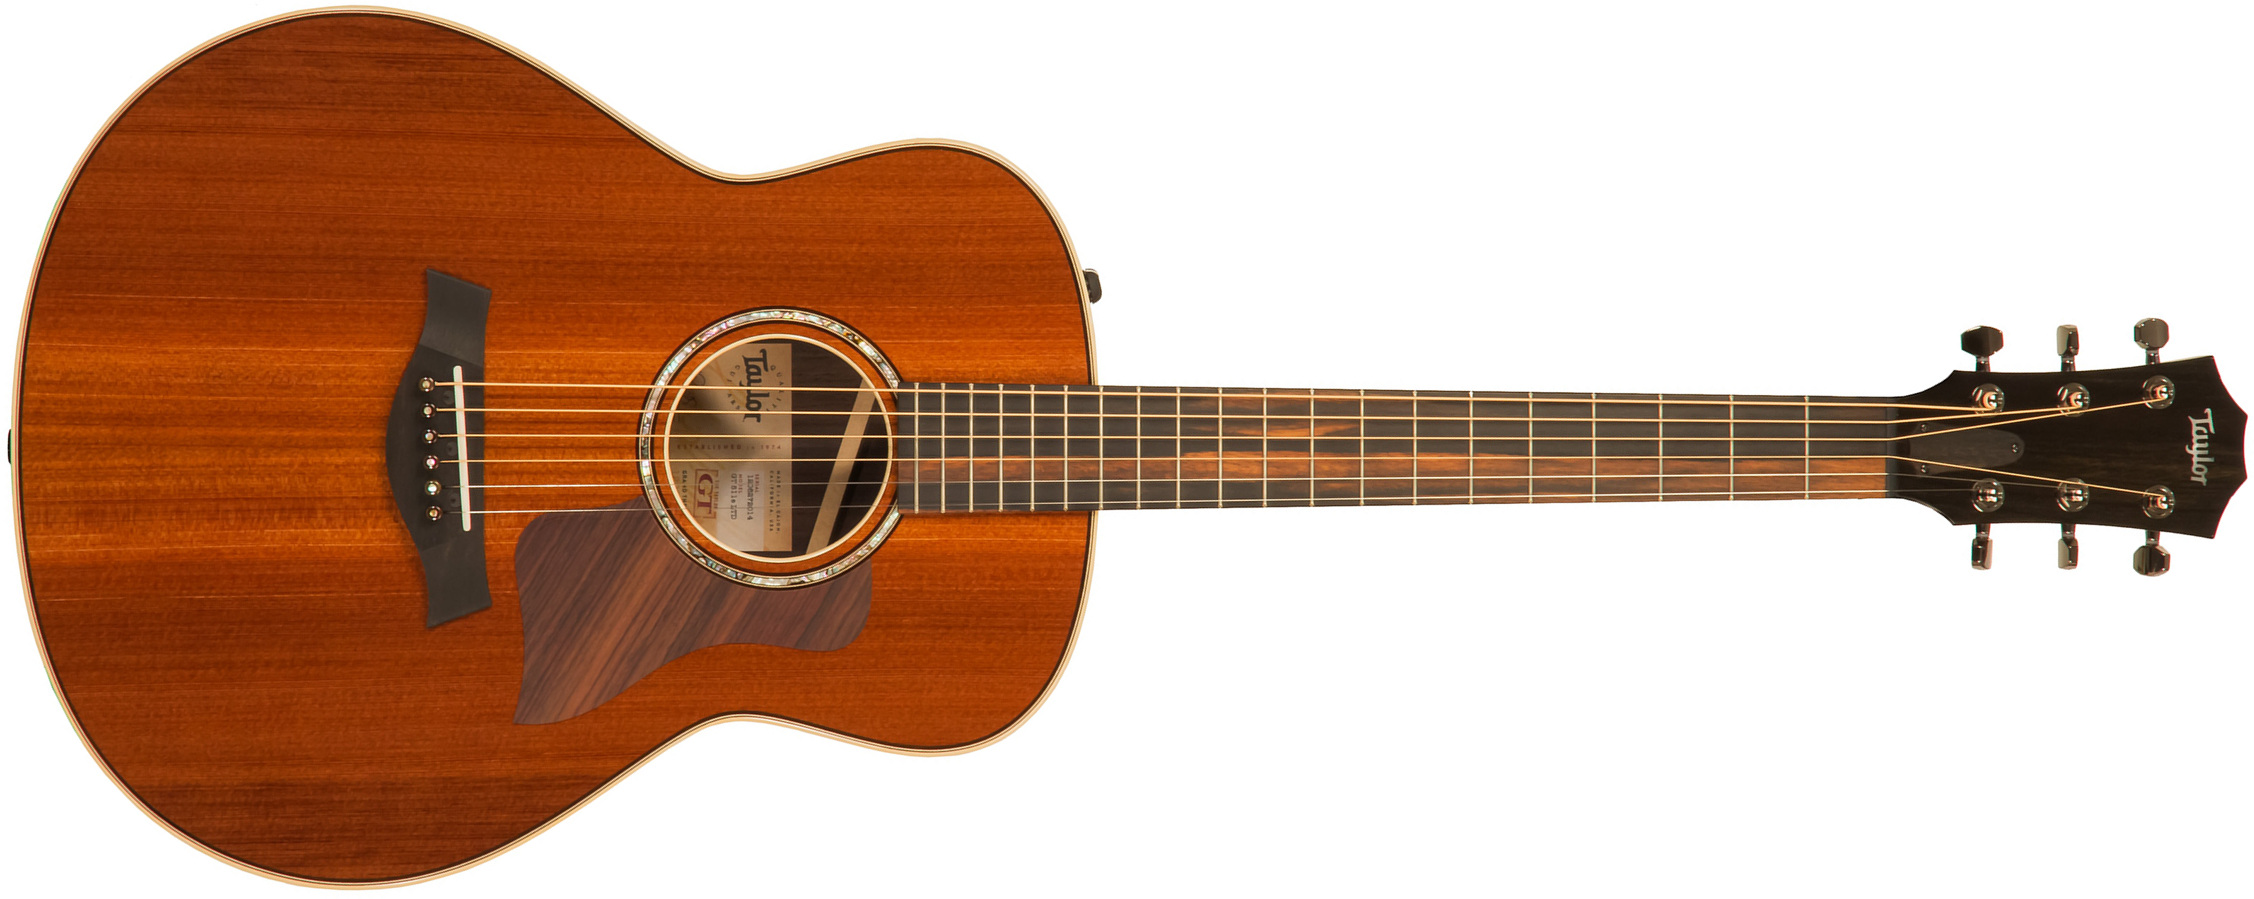 Taylor Gt 811e Ltd Grand Theatre Sinker Redwood Palissandre Eb Es2 - Natural - Electro acoustic guitar - Main picture